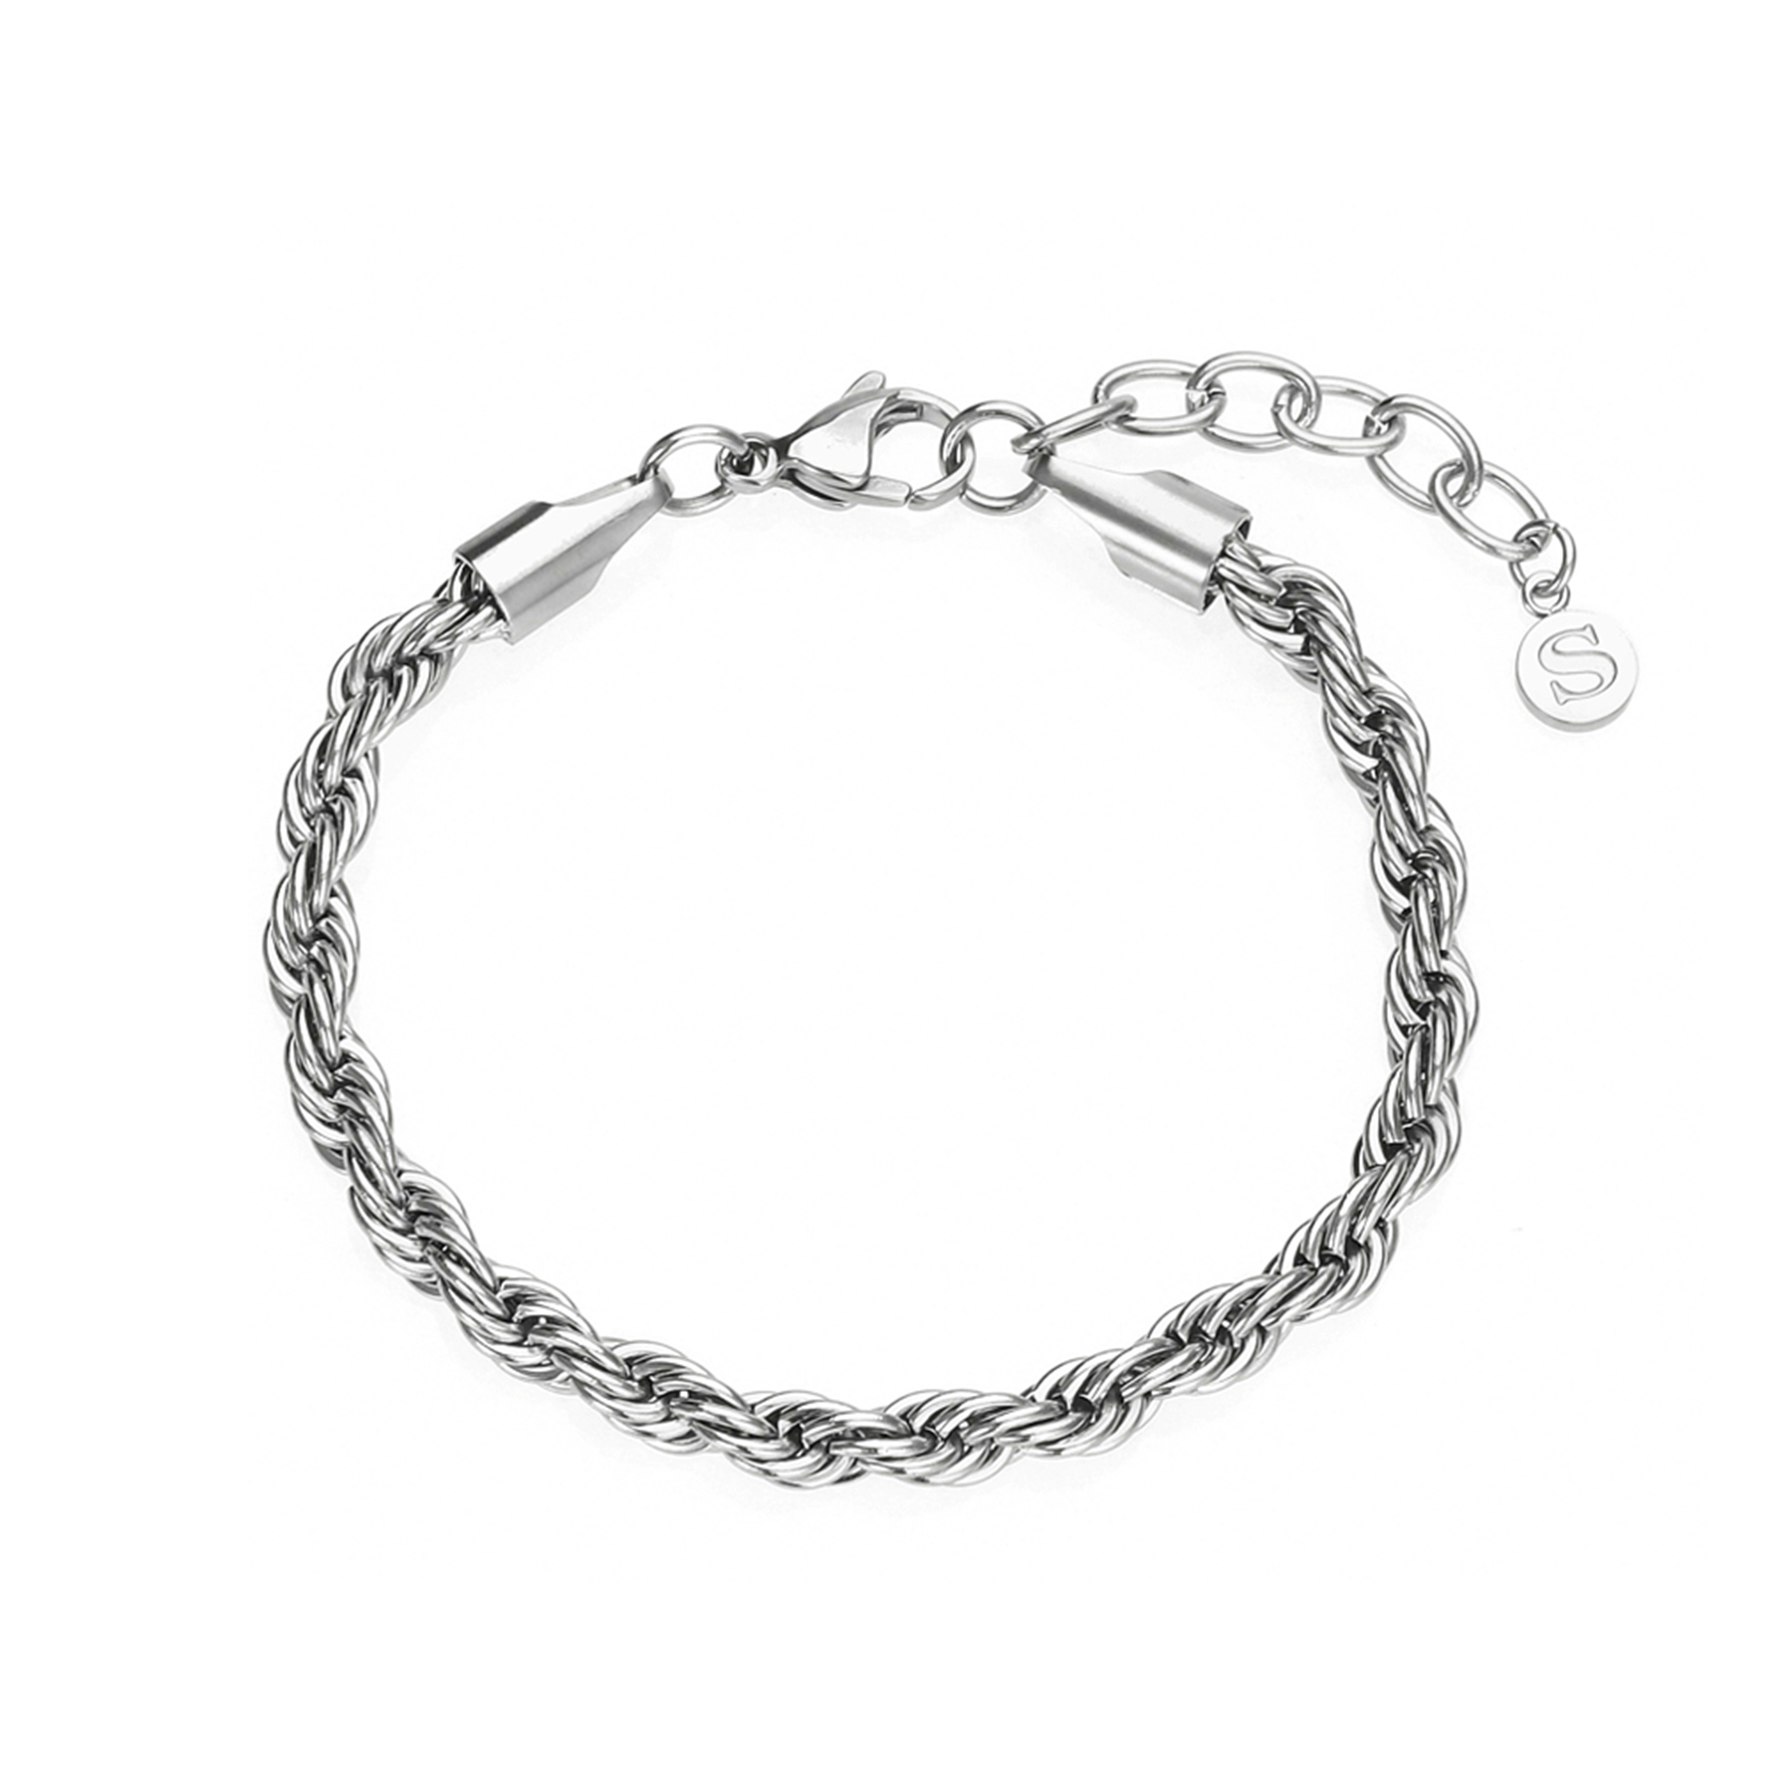 Rope Bracelet from Sistie 2nd in Stainless steel